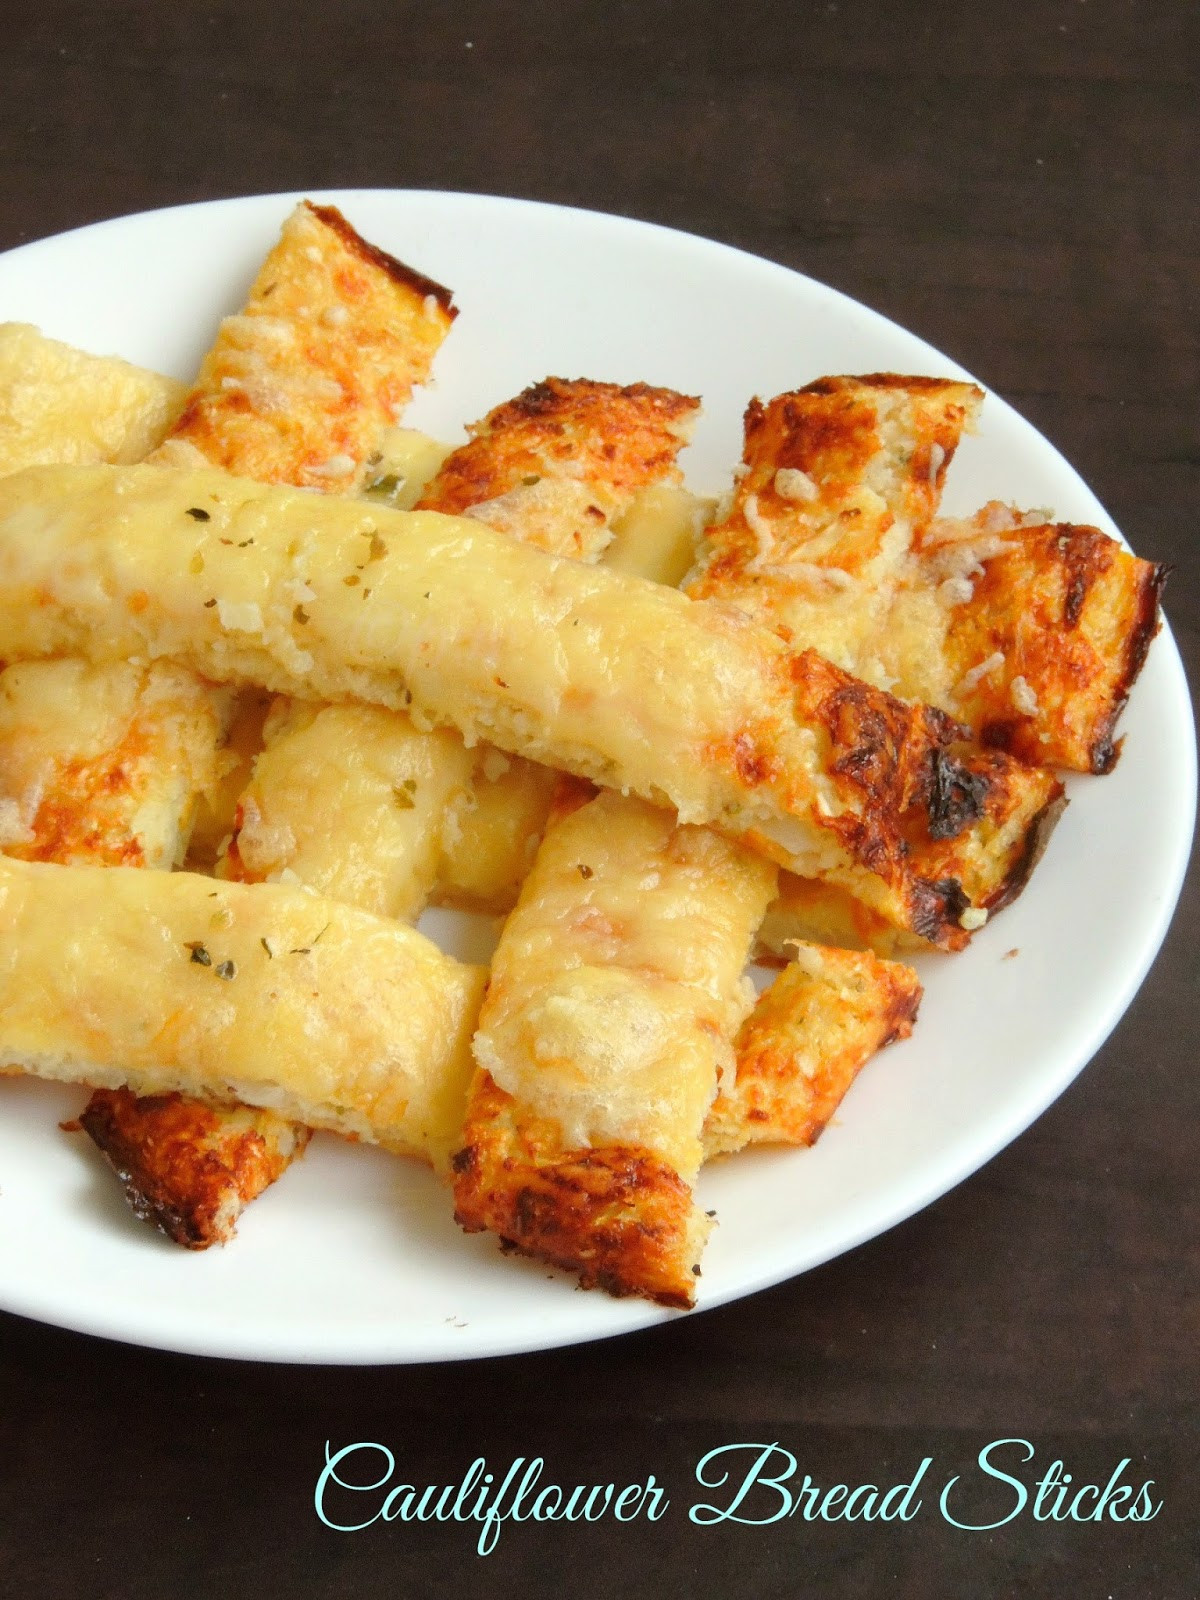 Gluten Free Bread Sticks Easy
 Priya s Versatile Recipes Low Carb Cauliflower Bread